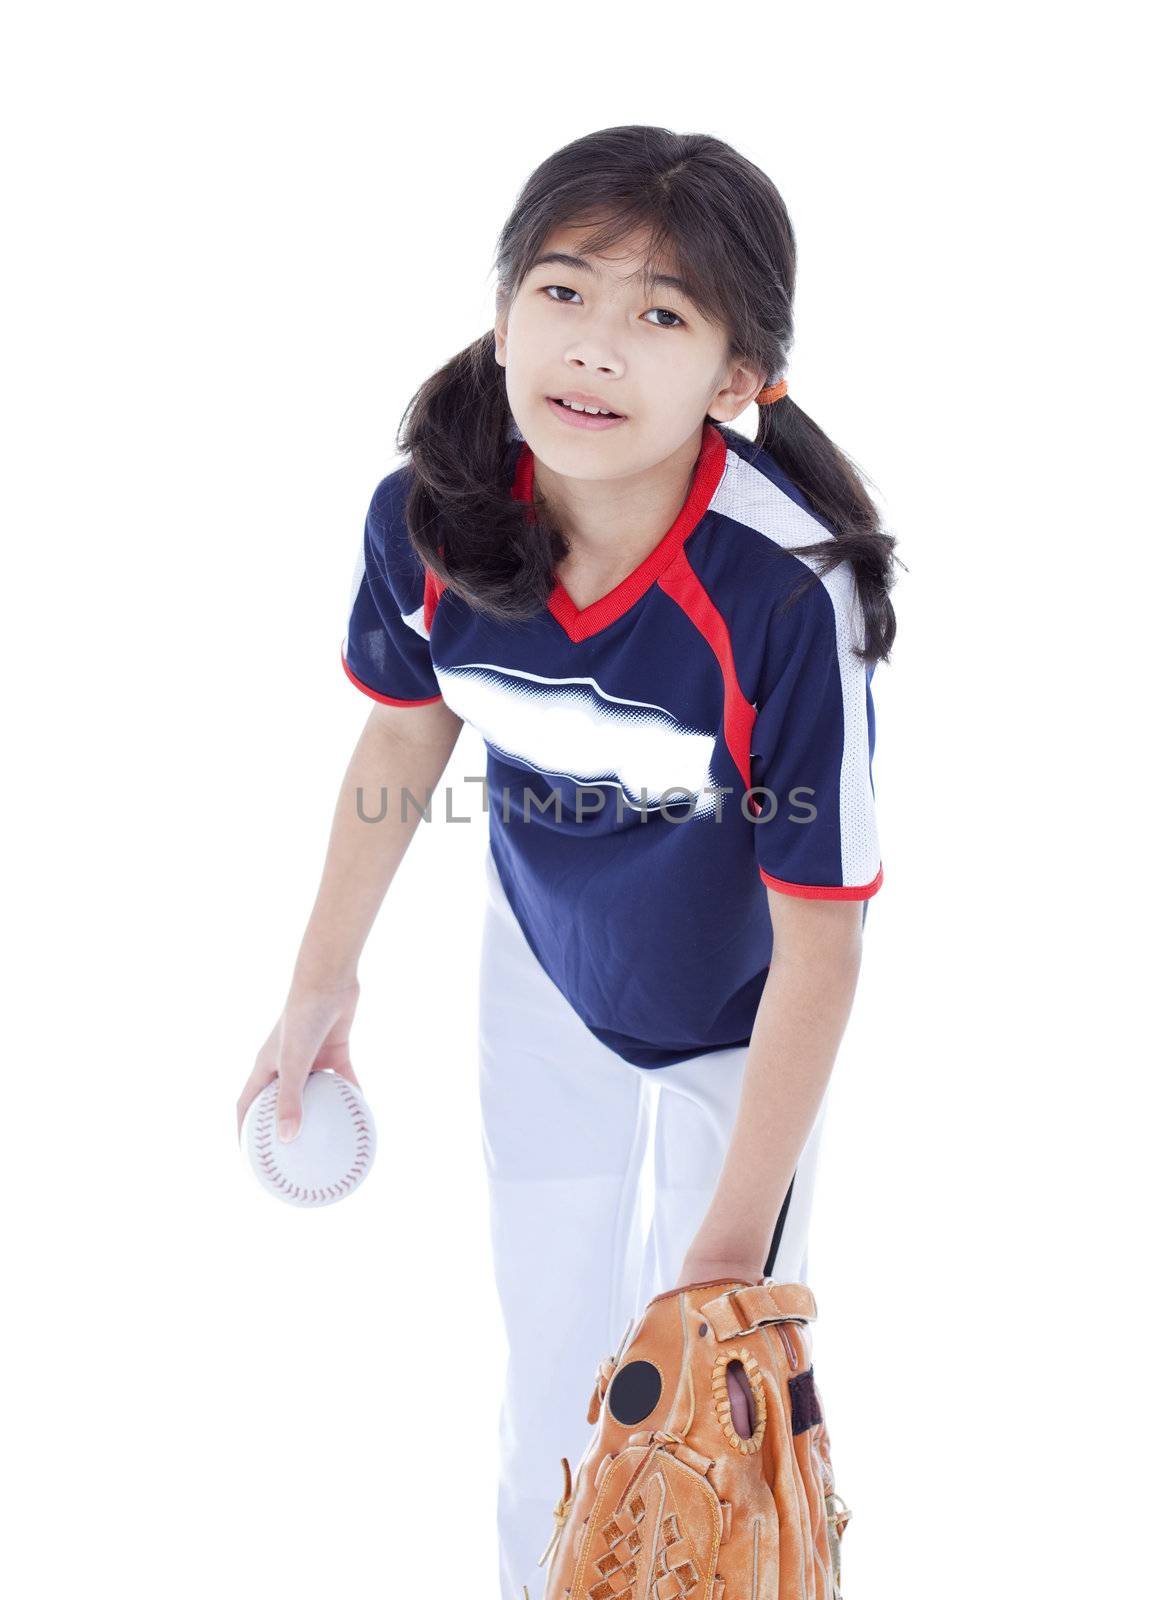 Little girl in softball team uniform ready to throw a pitch by jarenwicklund